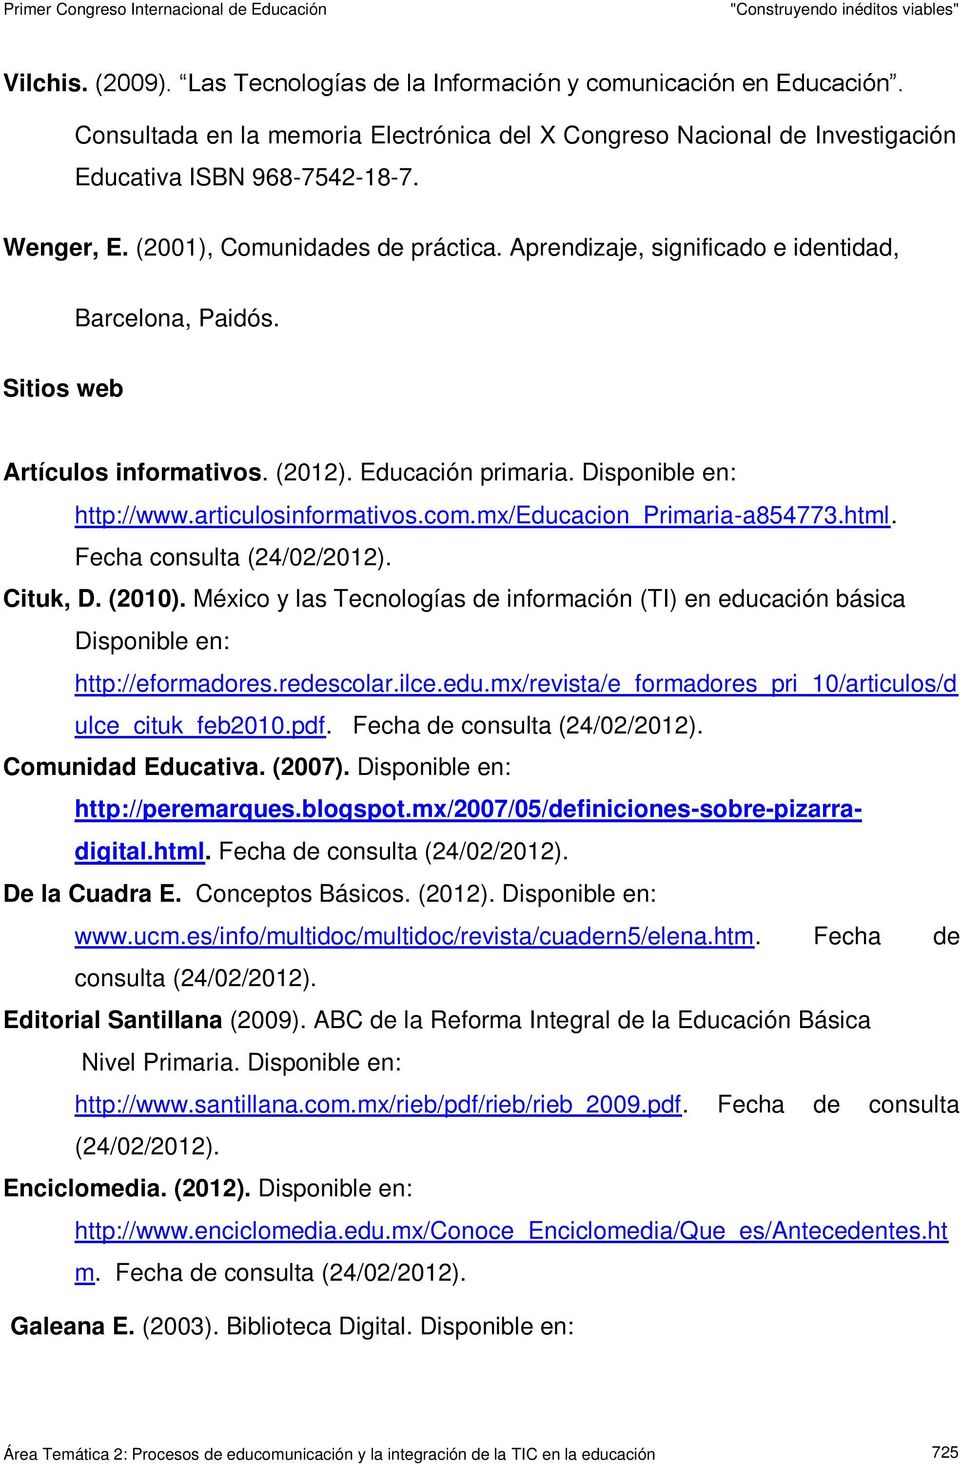 articulosinformativos.com.mx/educacion_primaria-a854773.html. Fecha consulta (24/02/2012). Cituk, D. (2010).